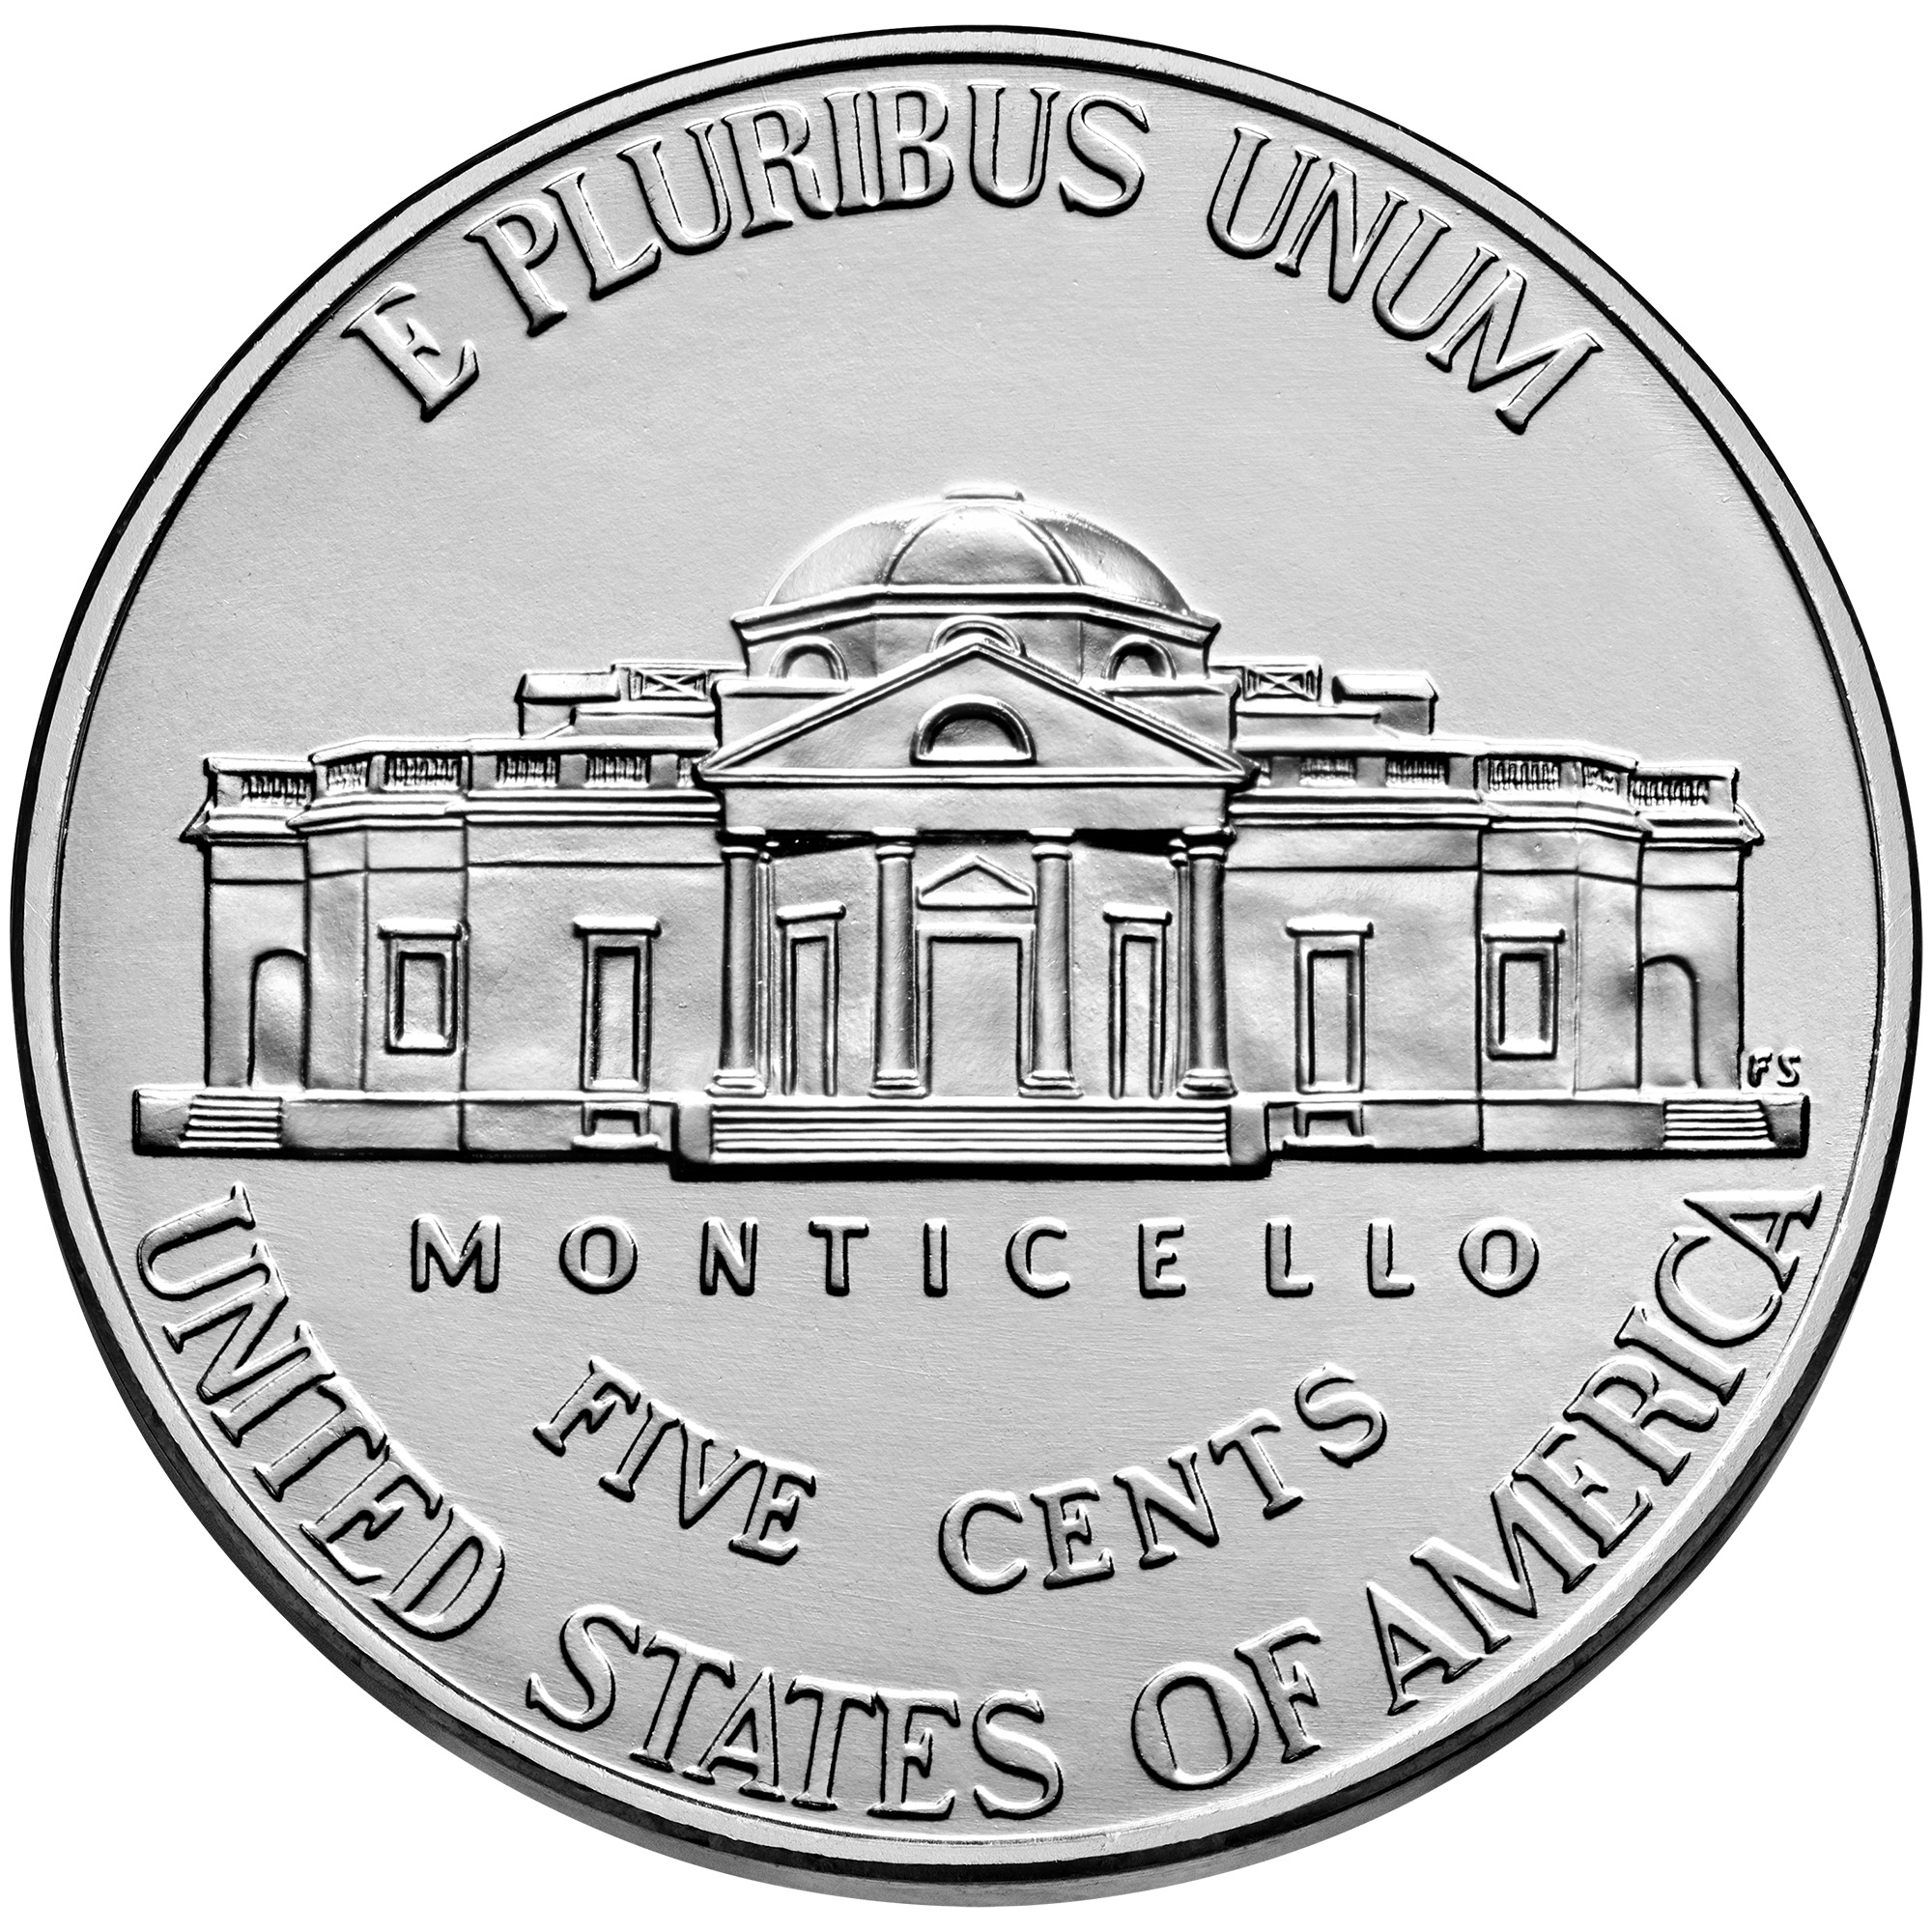 US 5 Cent - Nickel 2021 D